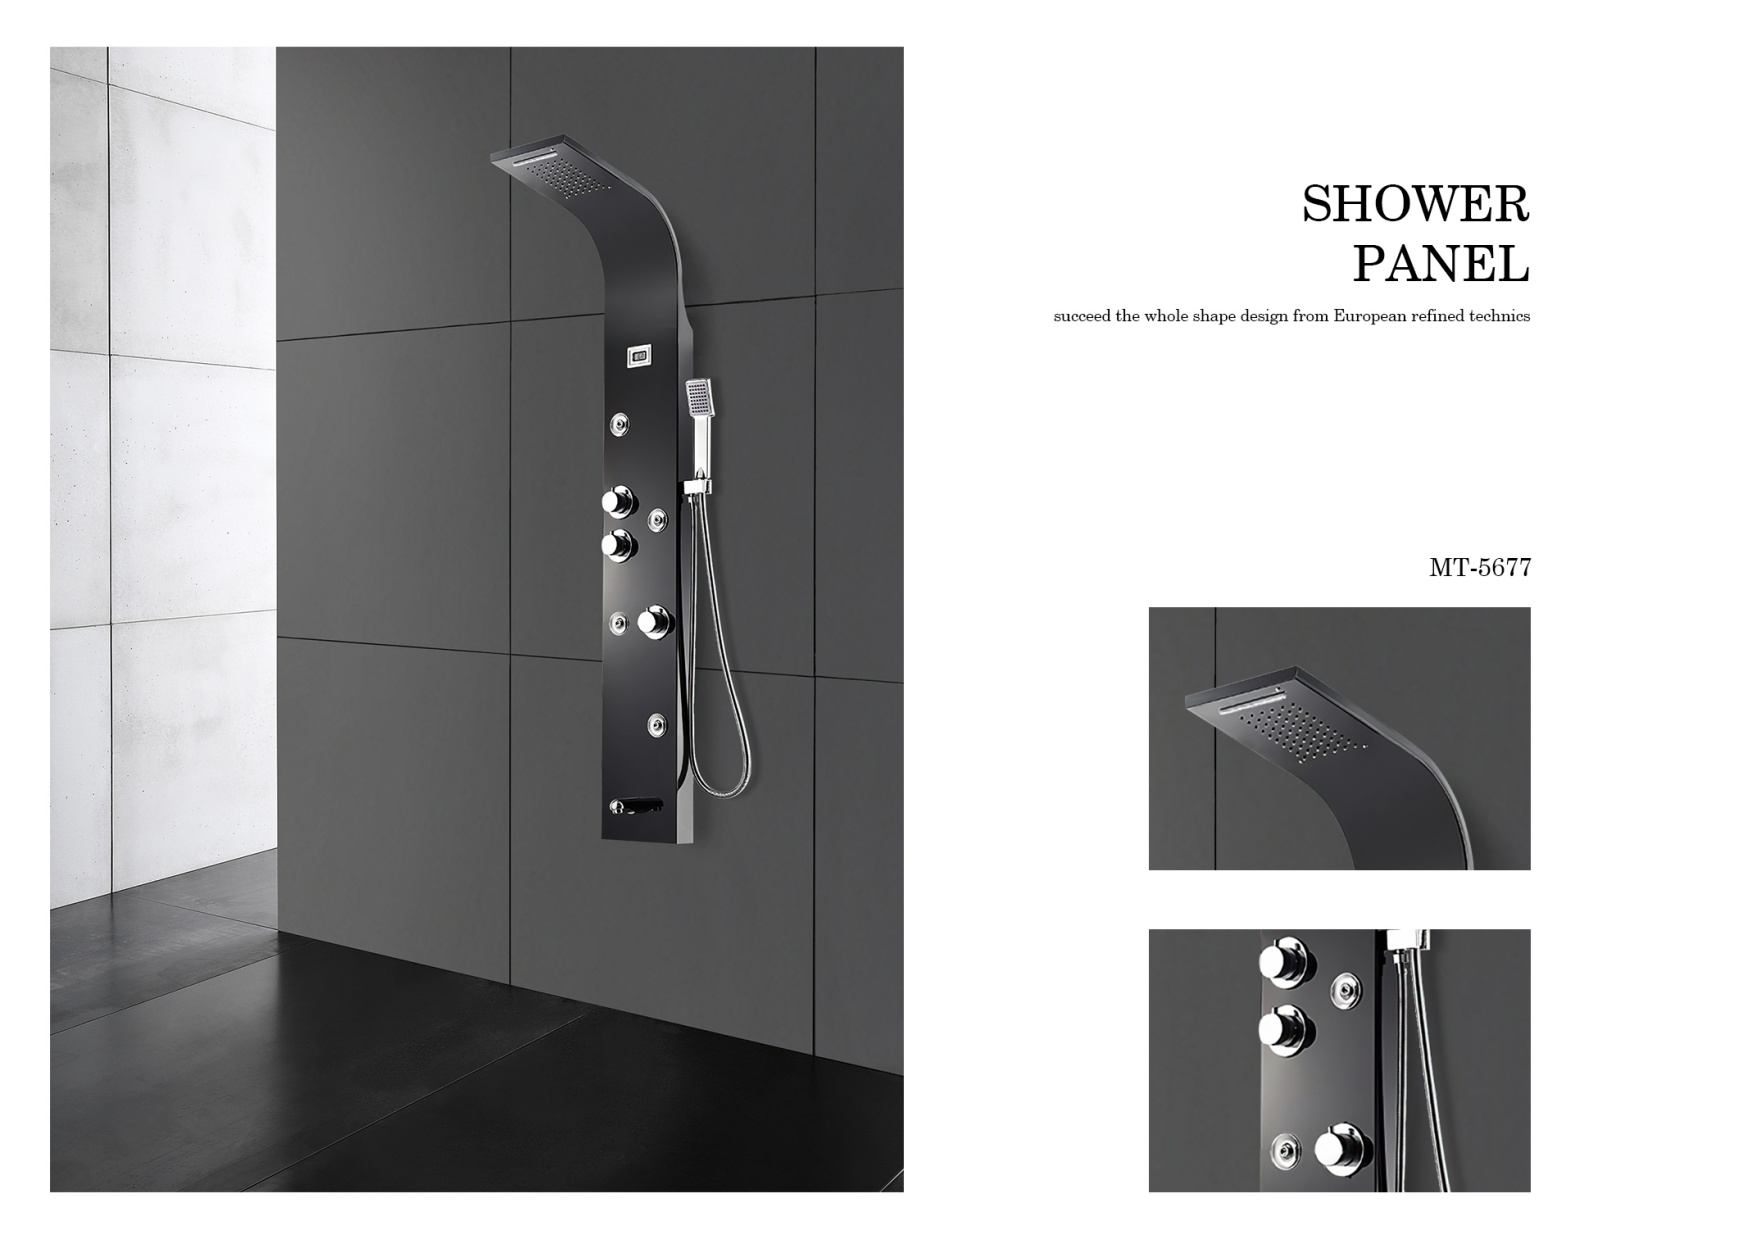 Multi-functional Shower Panel MT-5677	